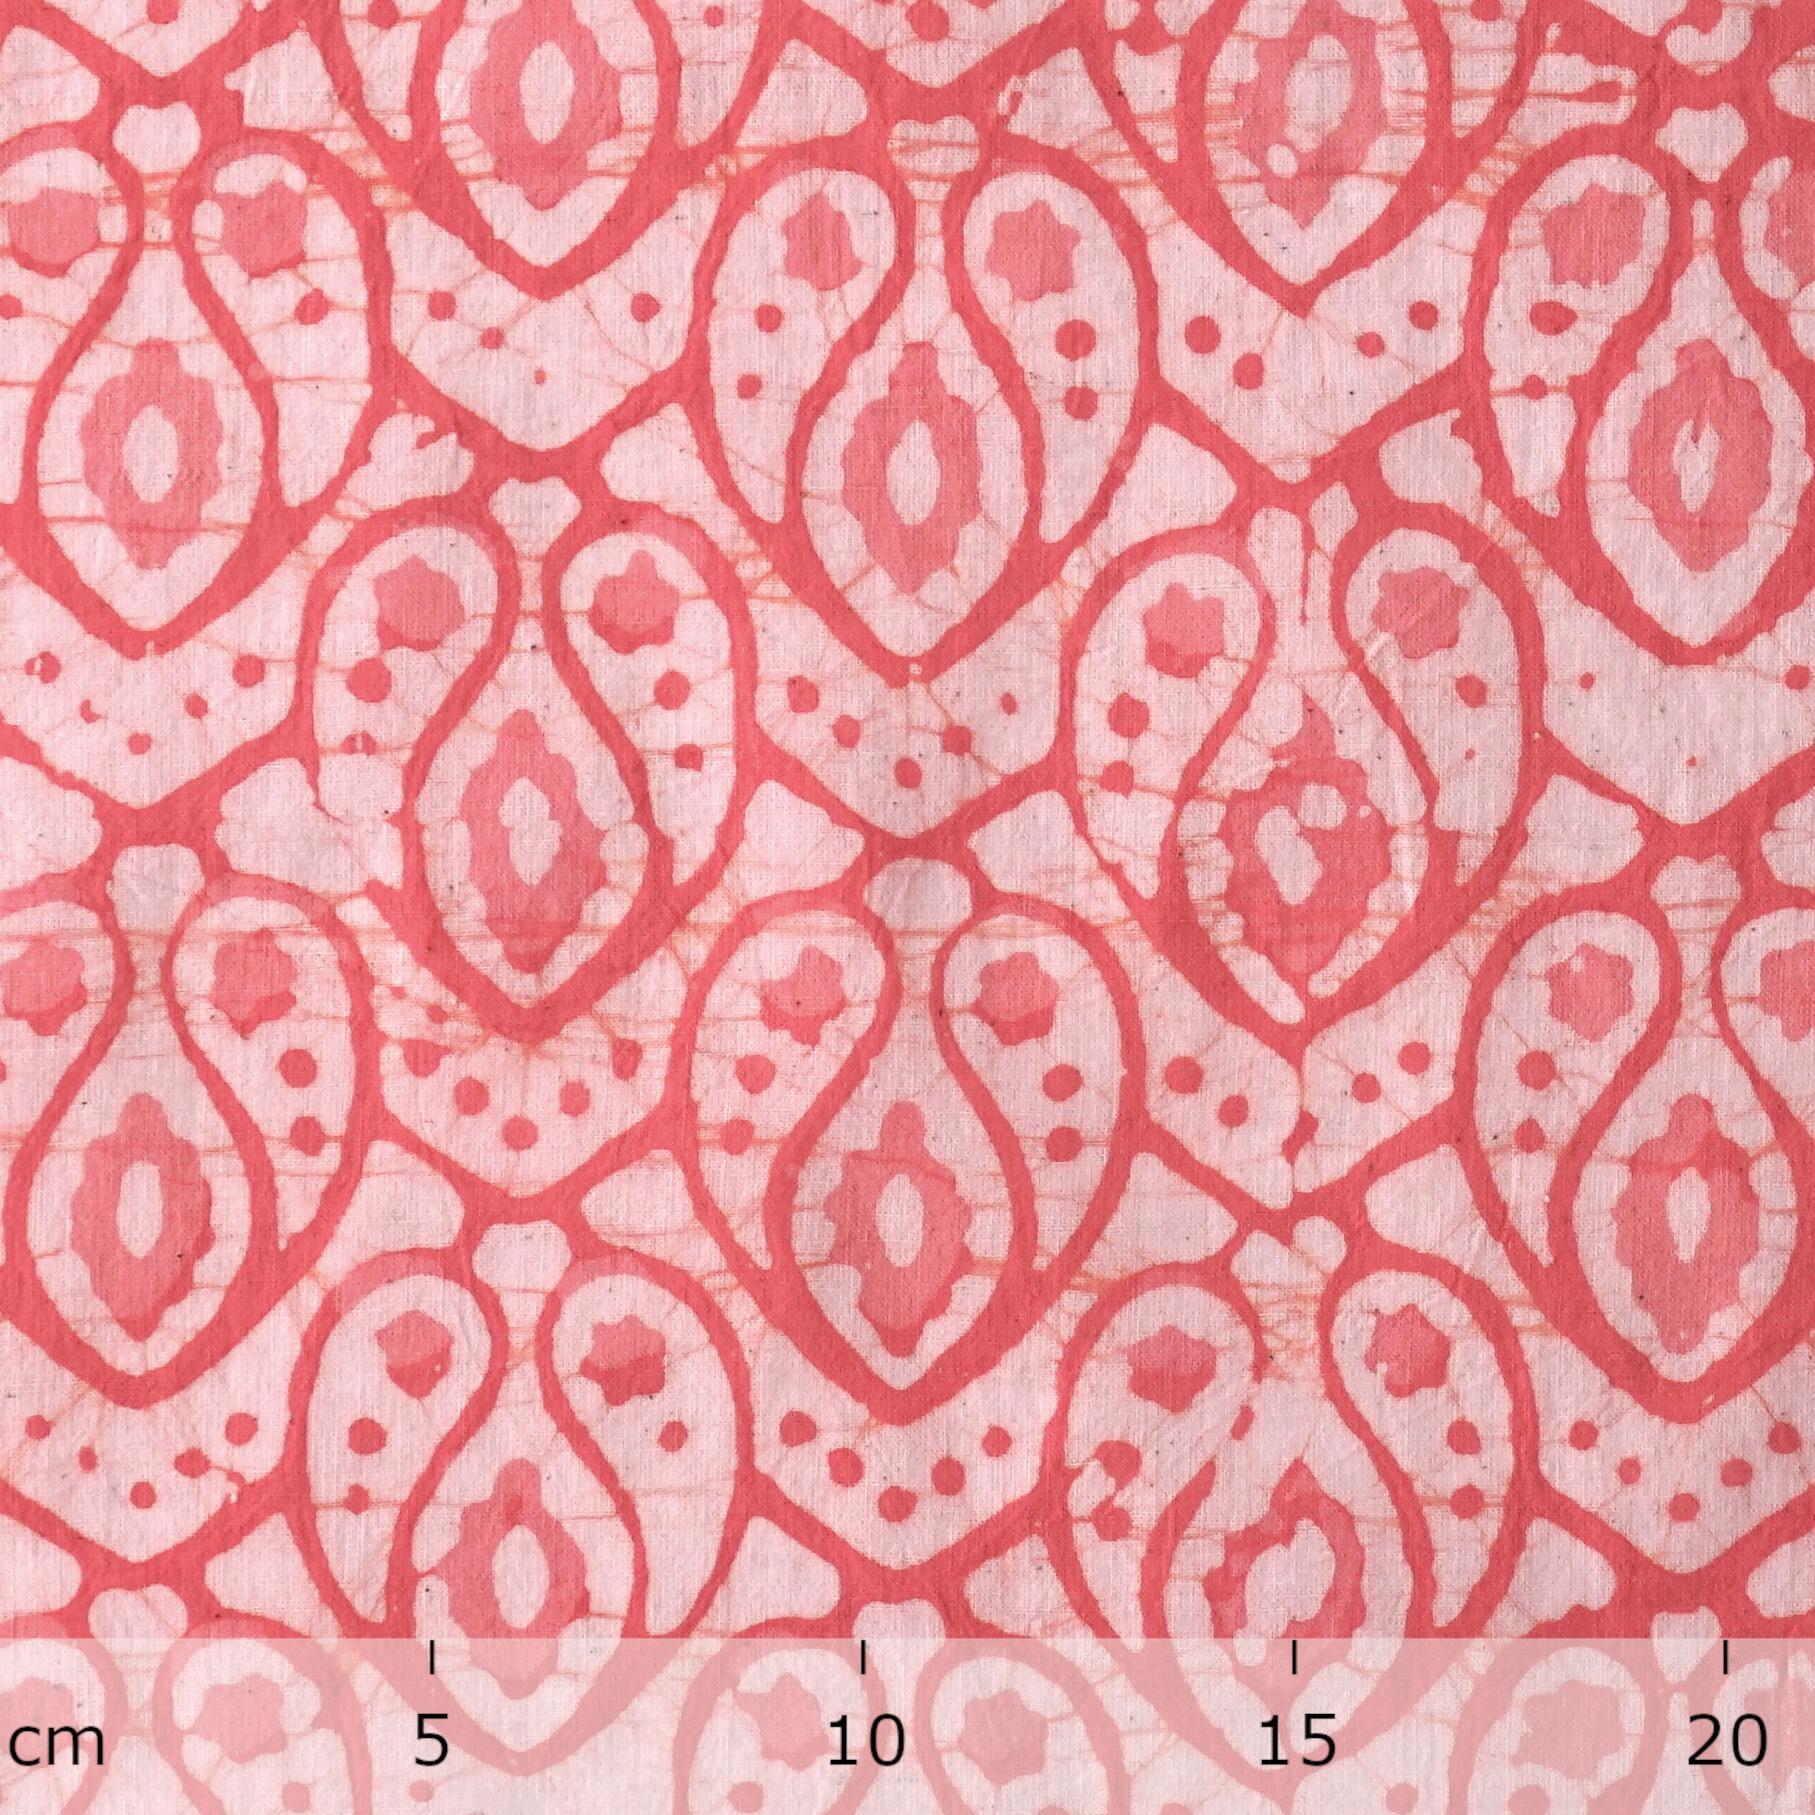 100% Block-Printed Batik Cotton Fabric From India - Tulip Mania Motif - Salmon Dye - Ruler